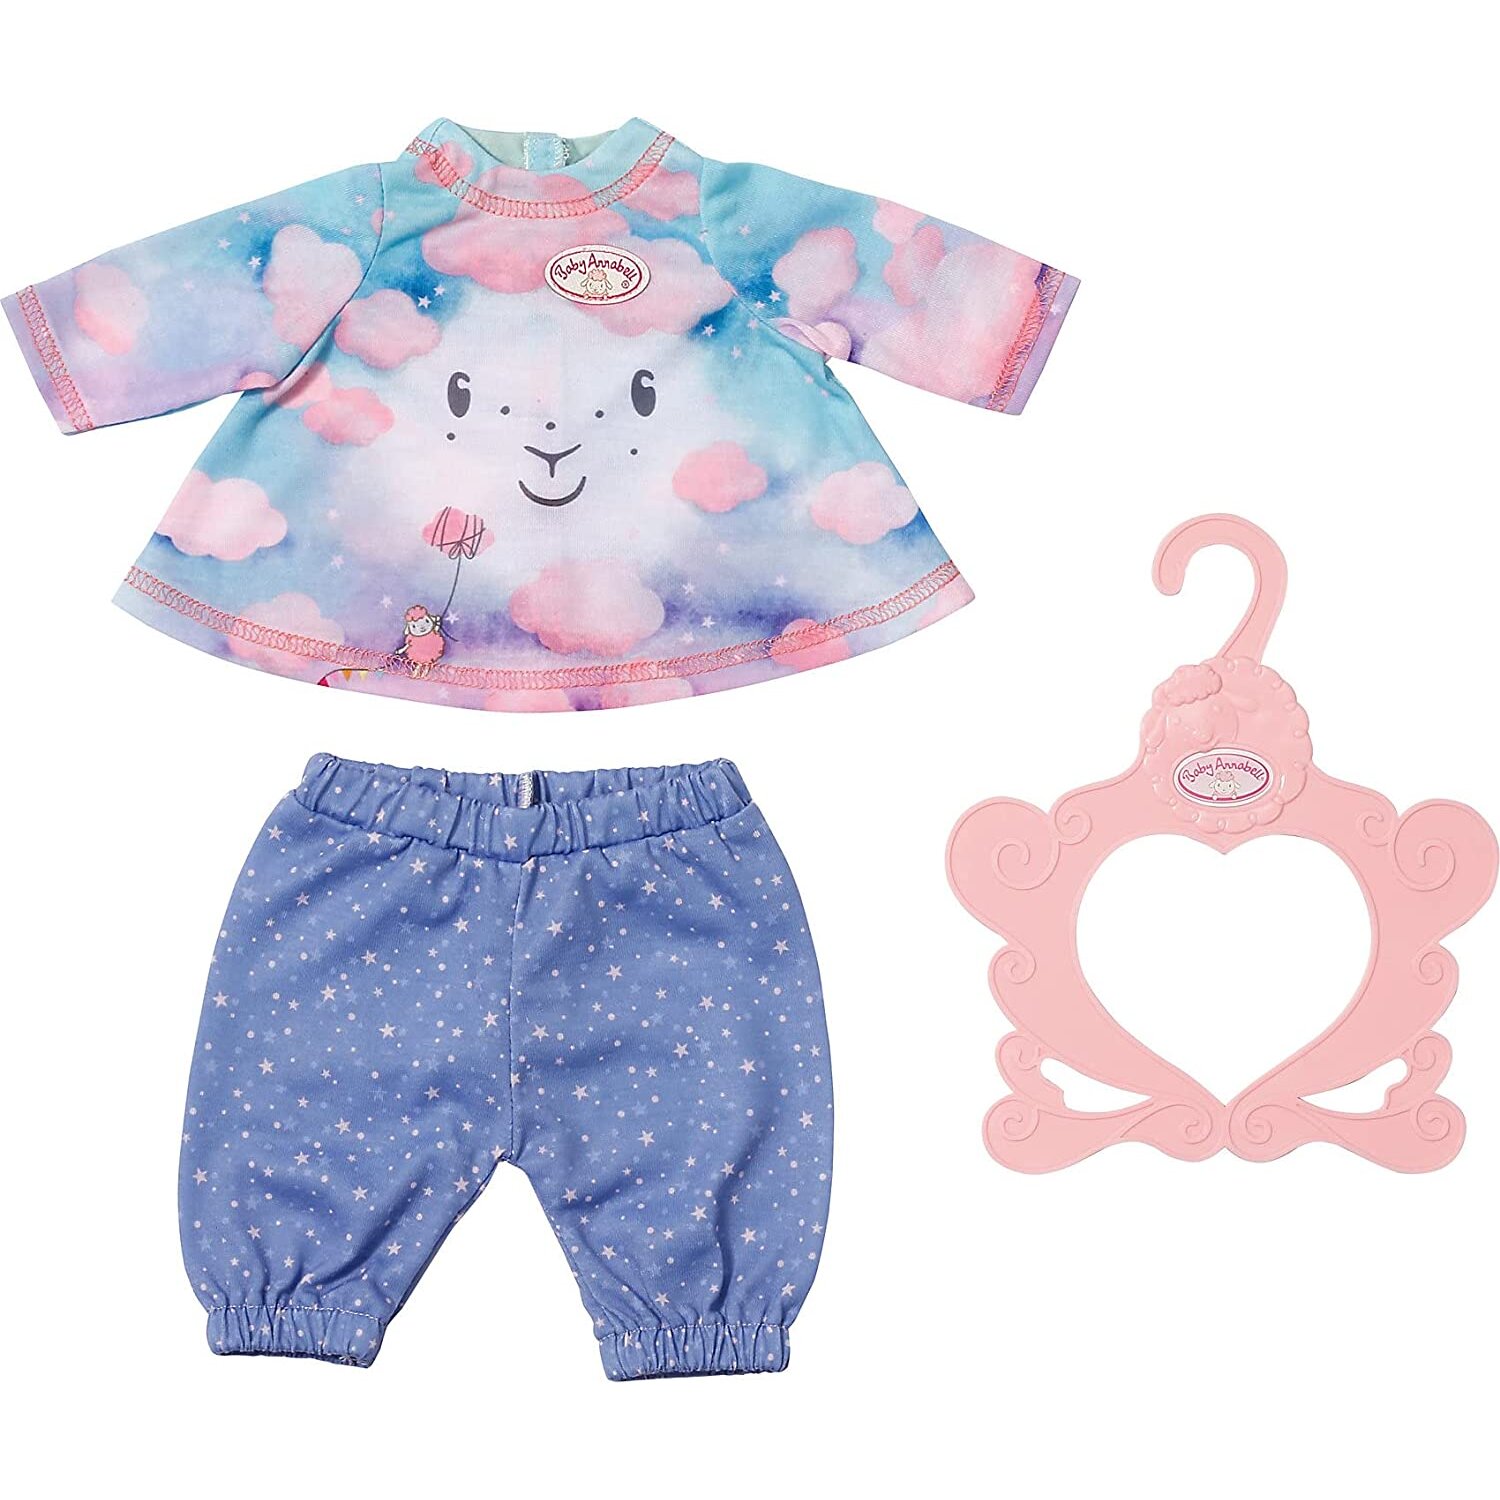 Baby Annabell Sweet Dreams Nightwear for 43 cm Dolls